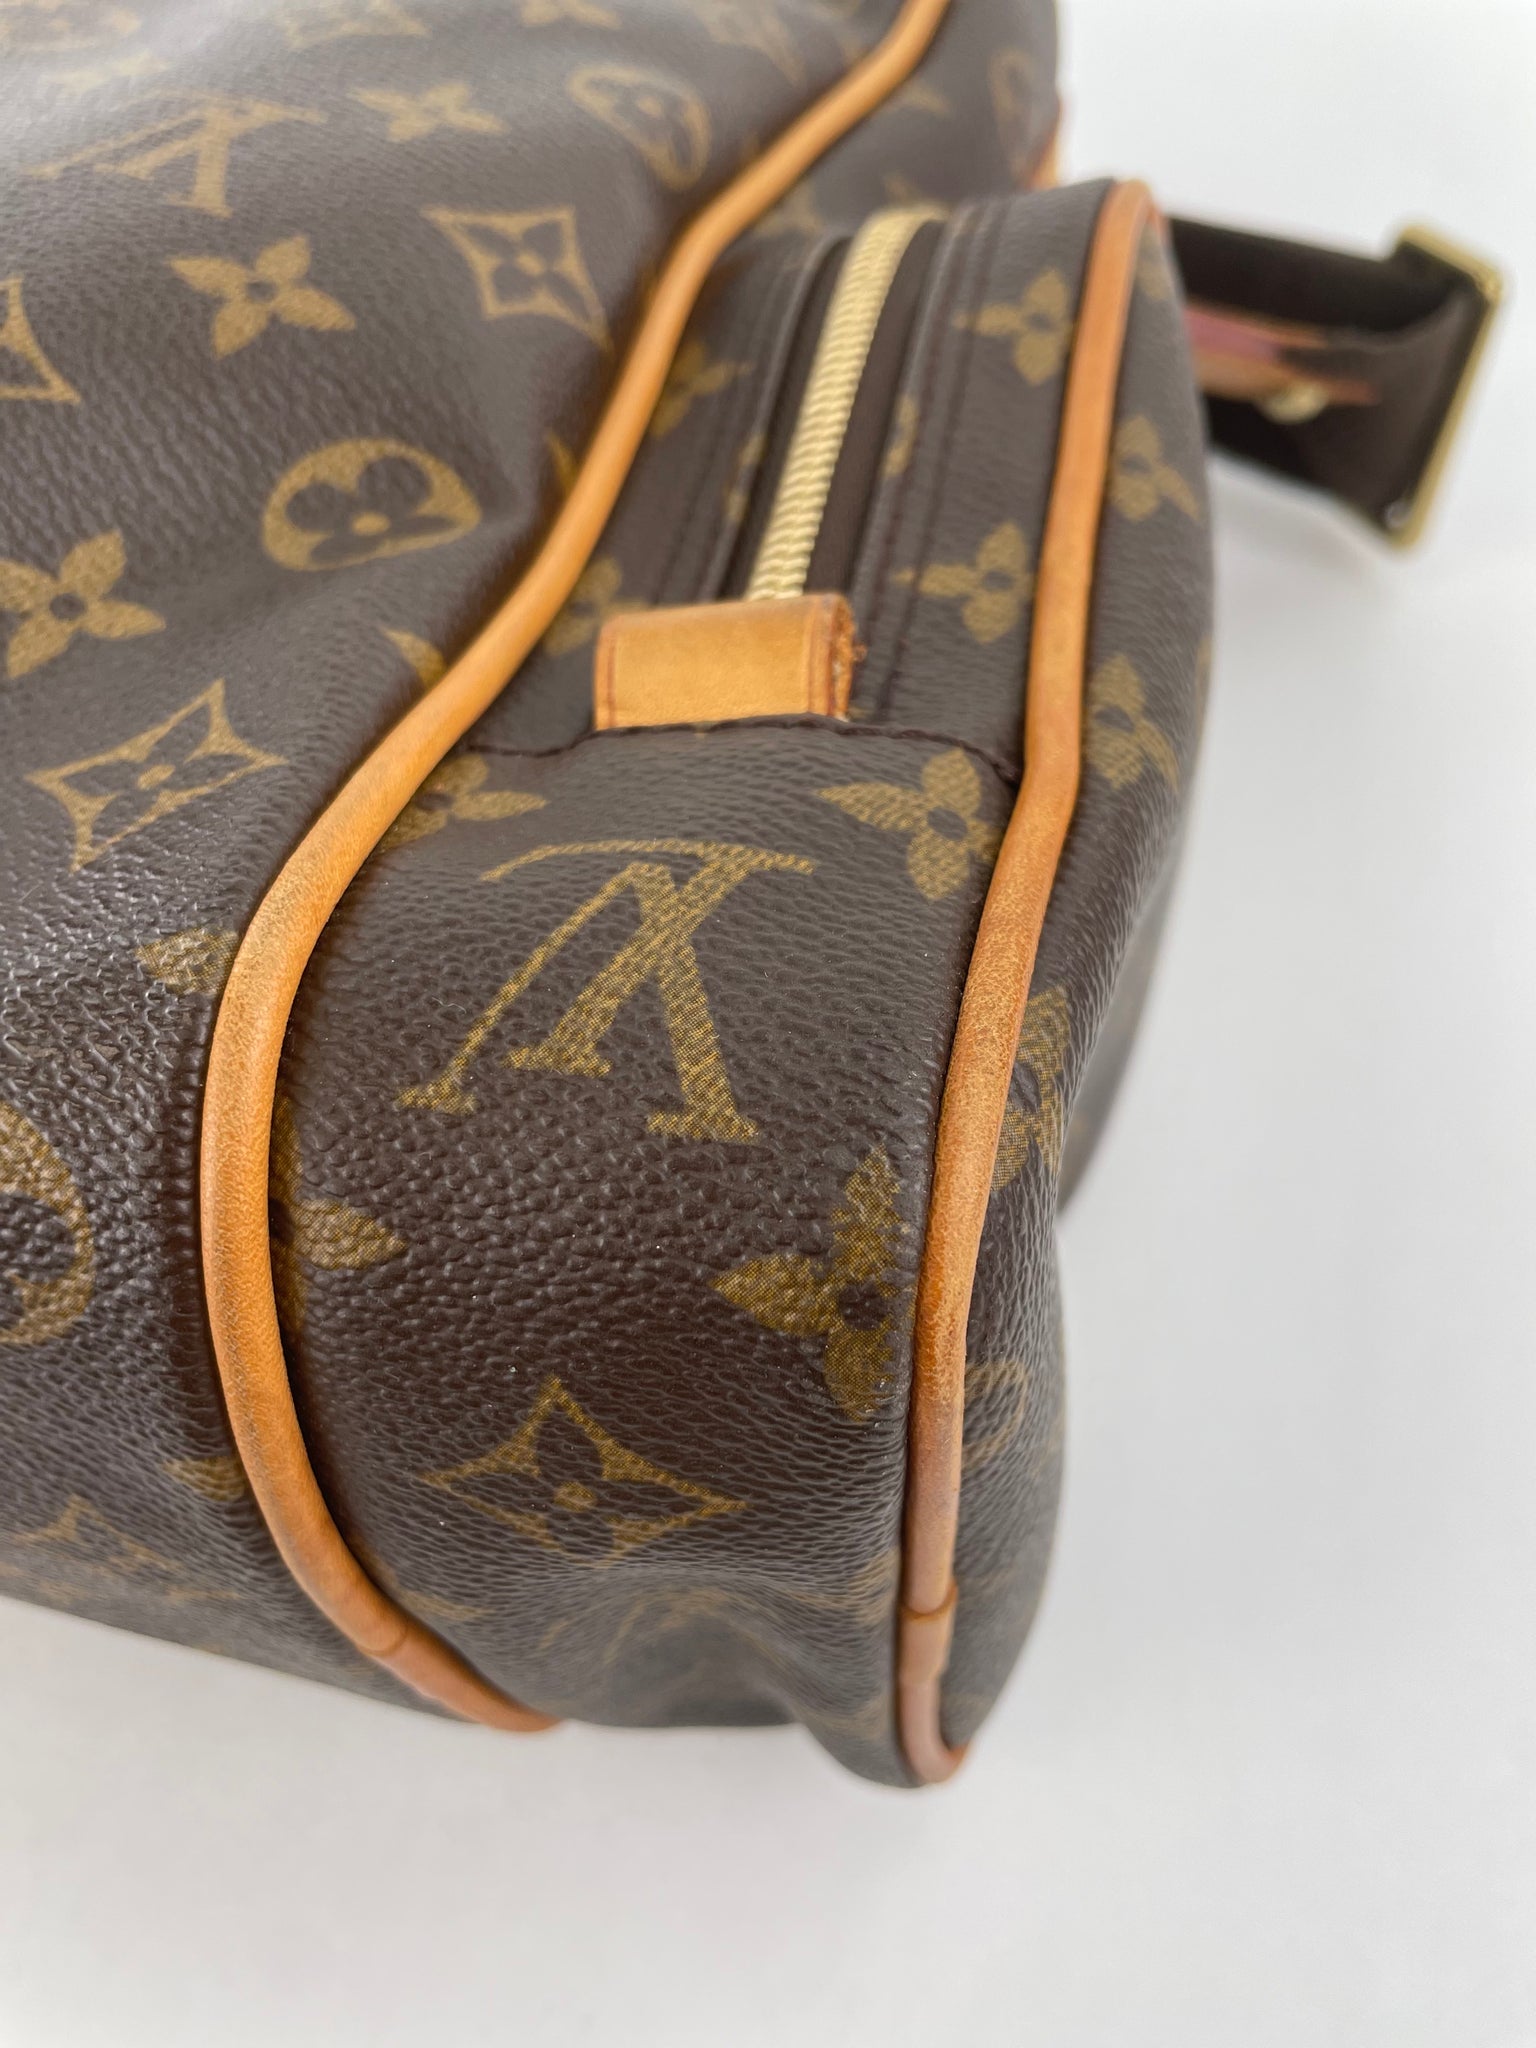 Louie Vuitton Messenger Bag A.K.a. Man Purse for Sale in Tujunga